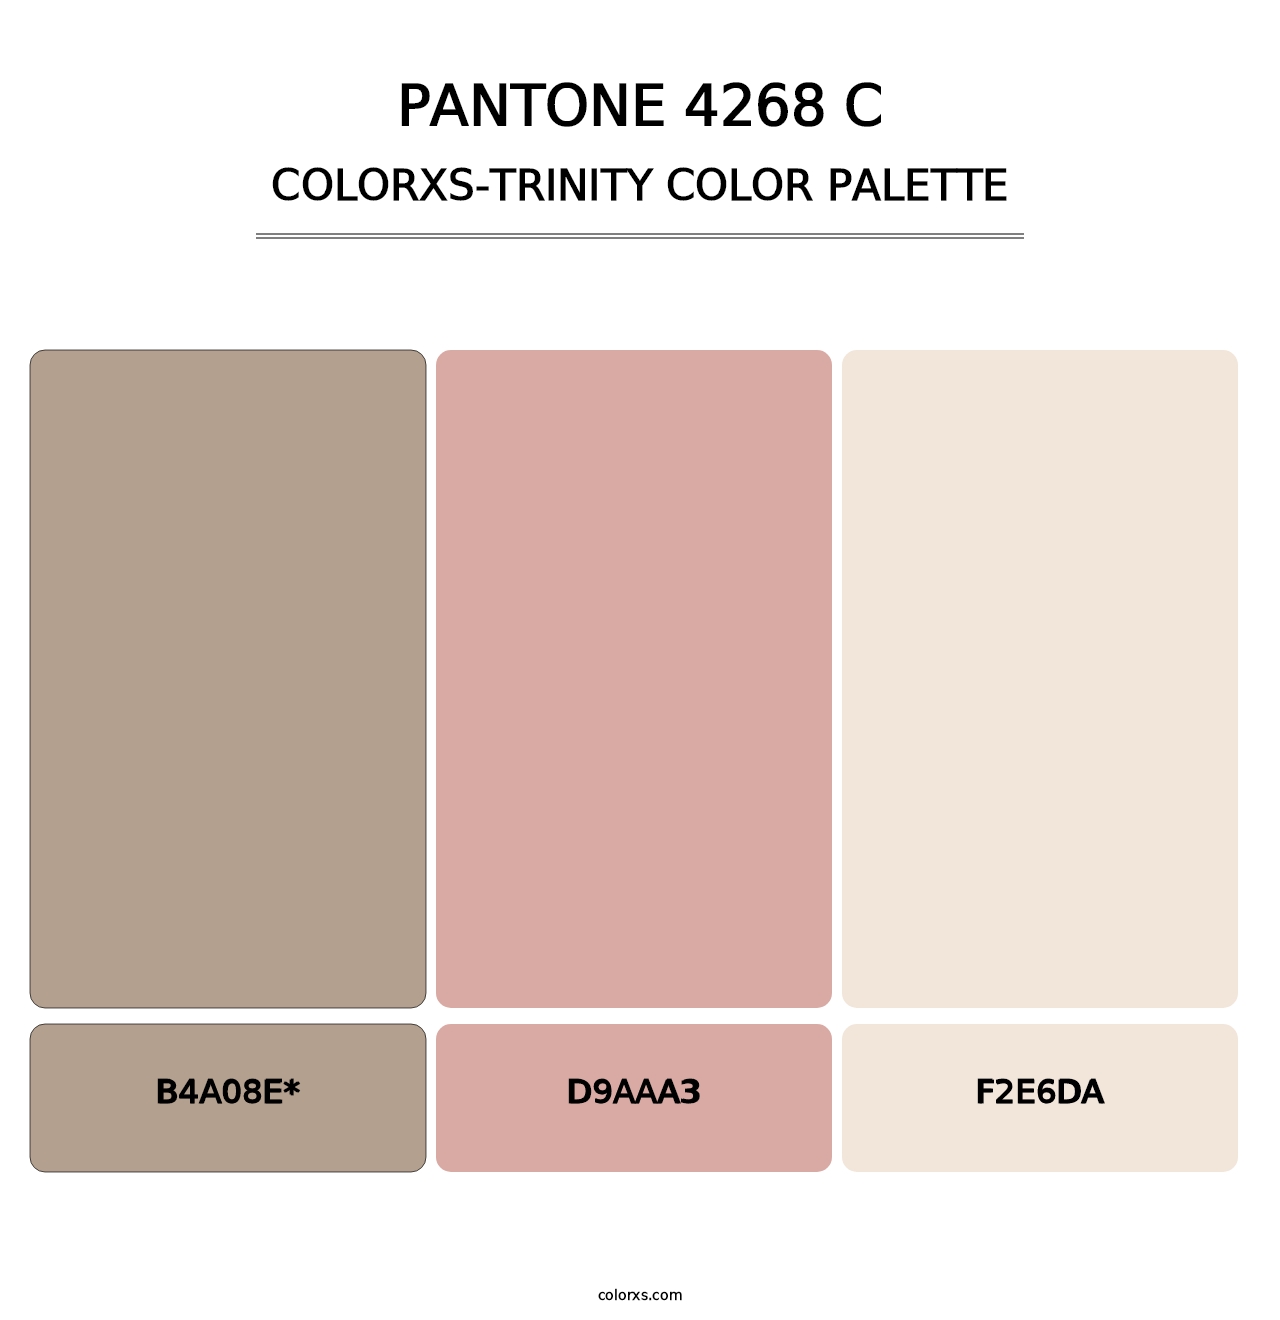 PANTONE 4268 C - Colorxs Trinity Palette